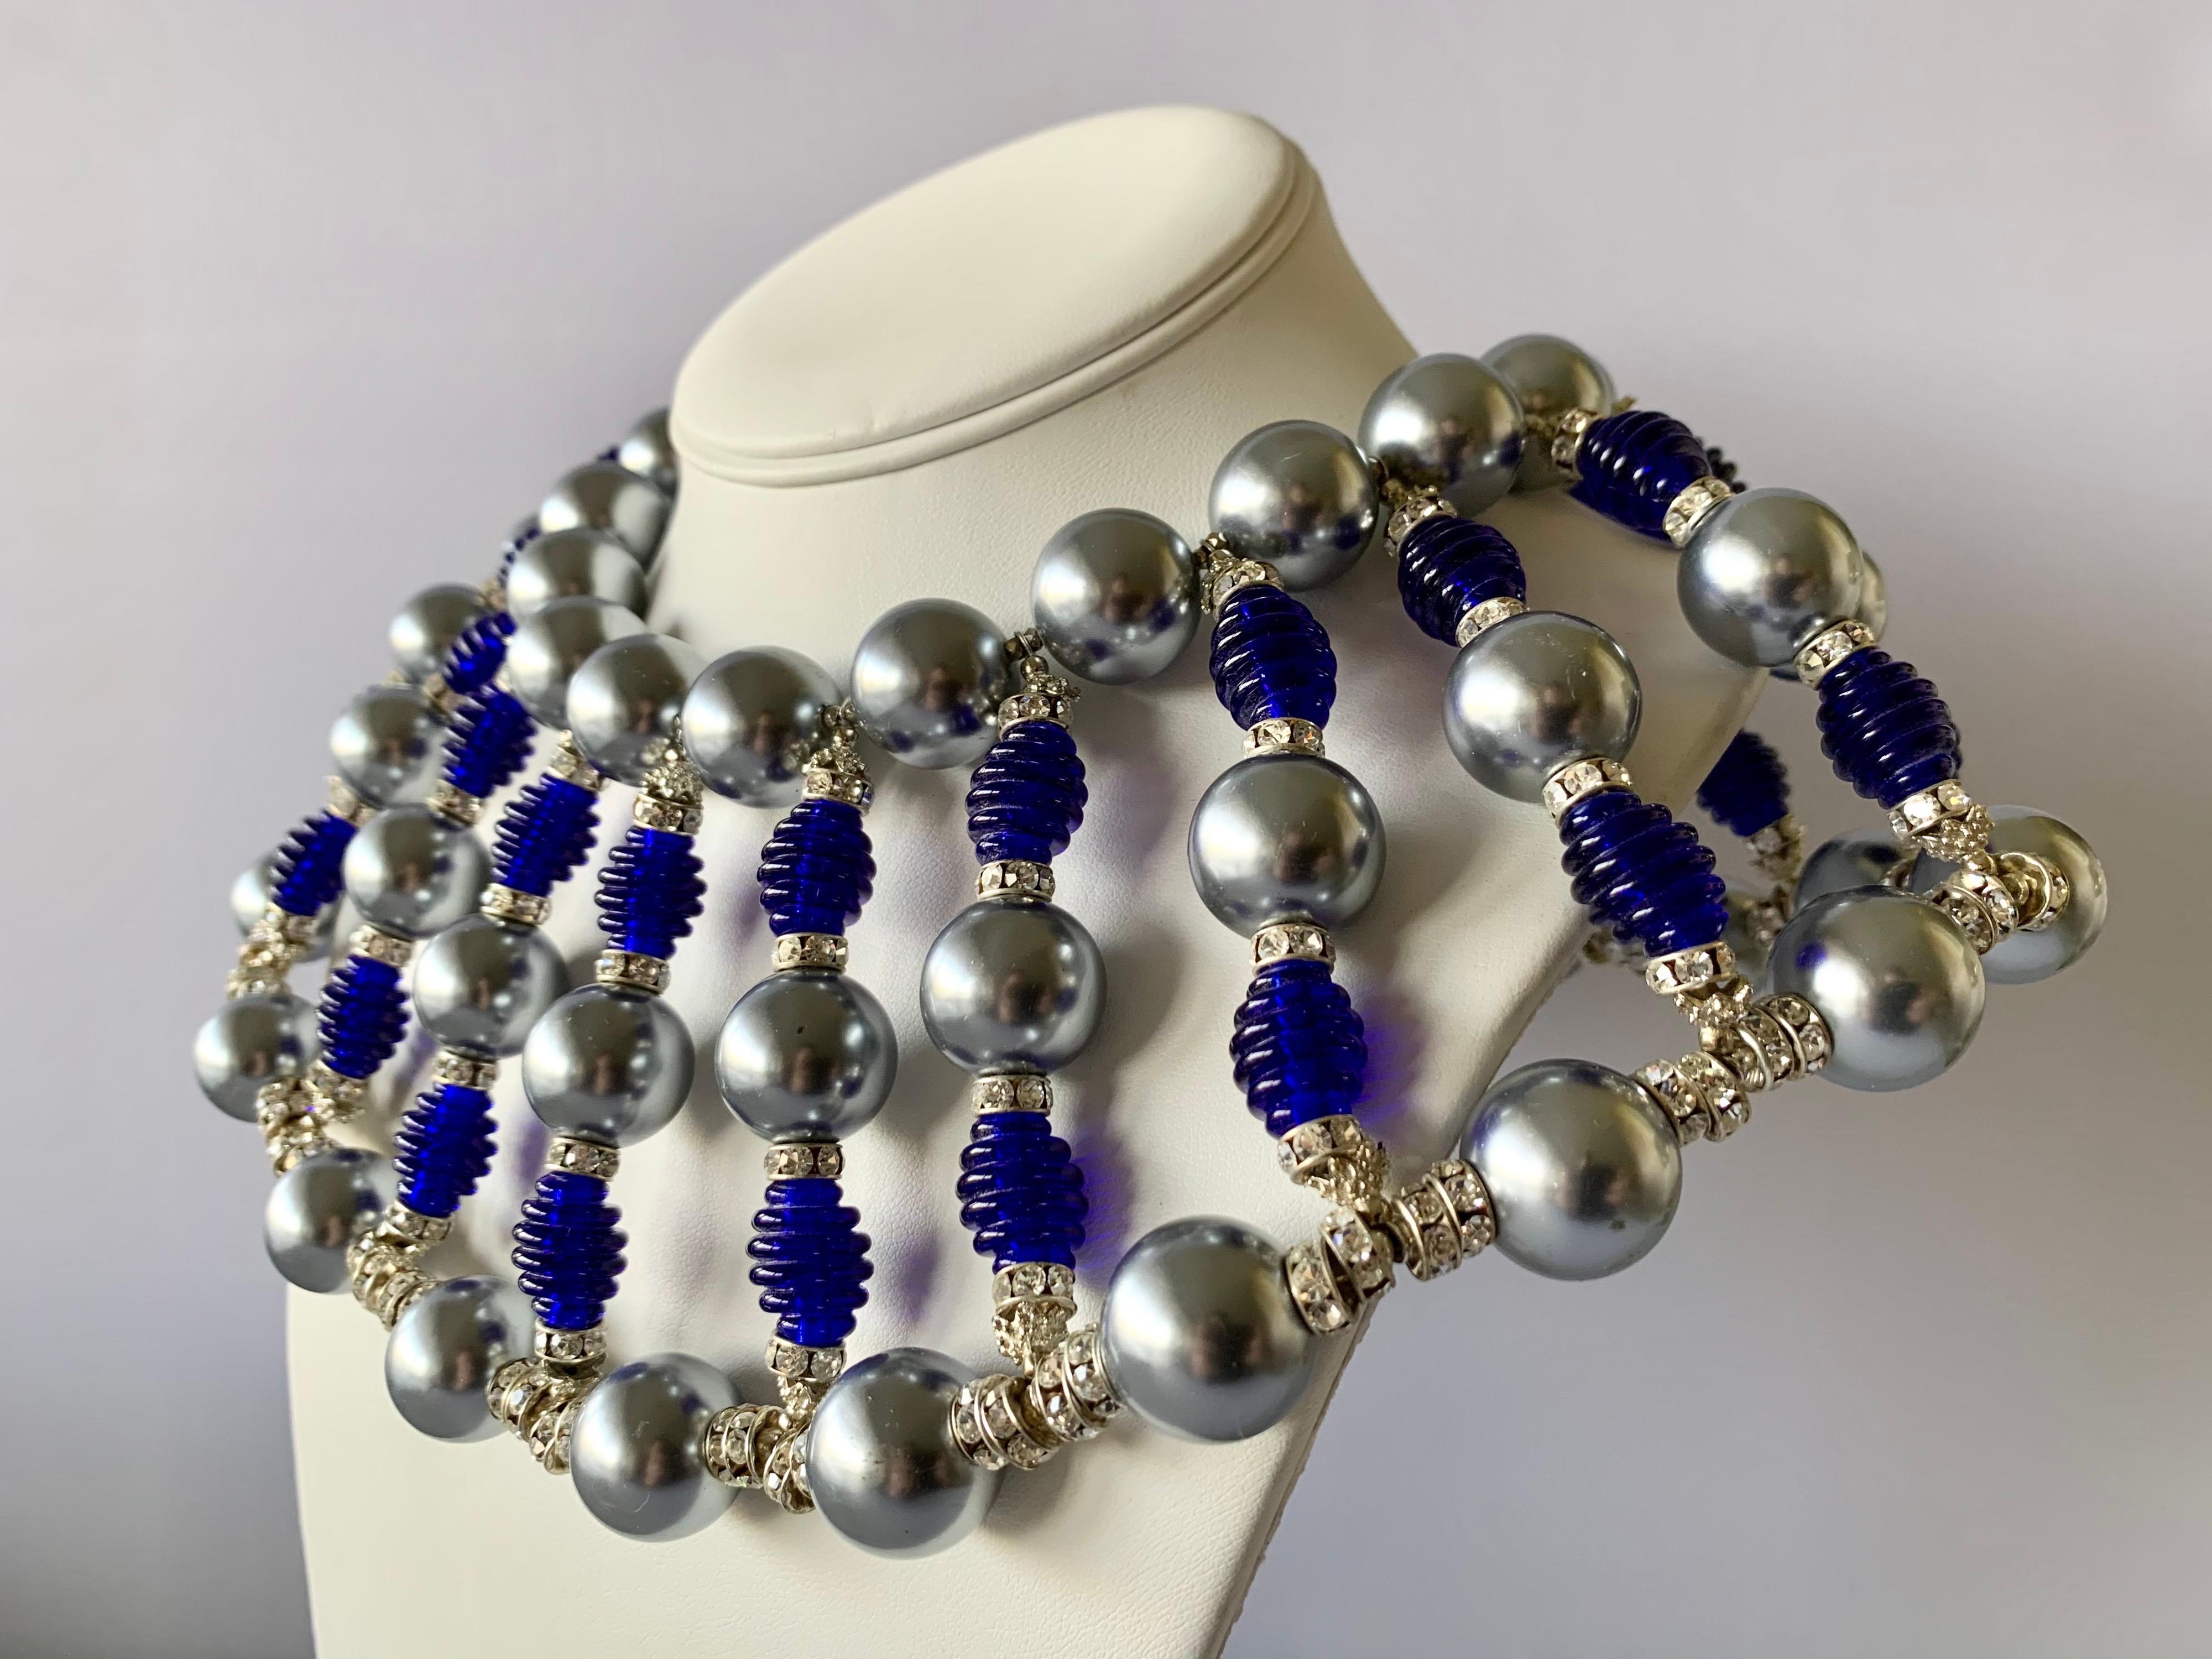 Ball Cut Massive Cobalt Blue, Diamante, and Grey Pearl Bib Necklace